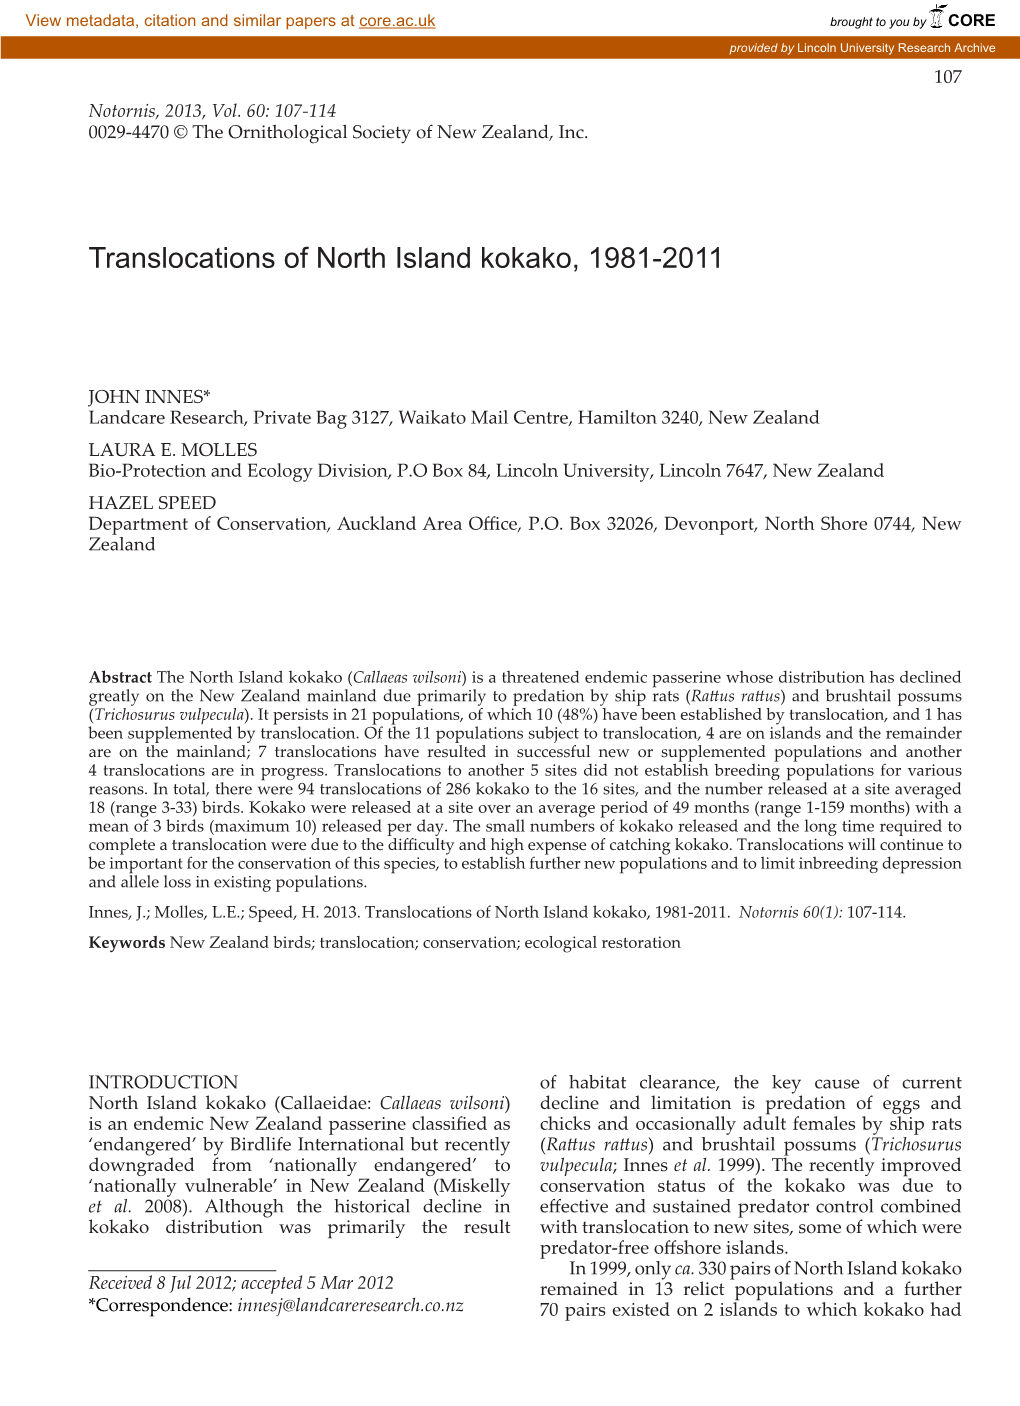 Translocations of North Island Kokako, 1981-2011